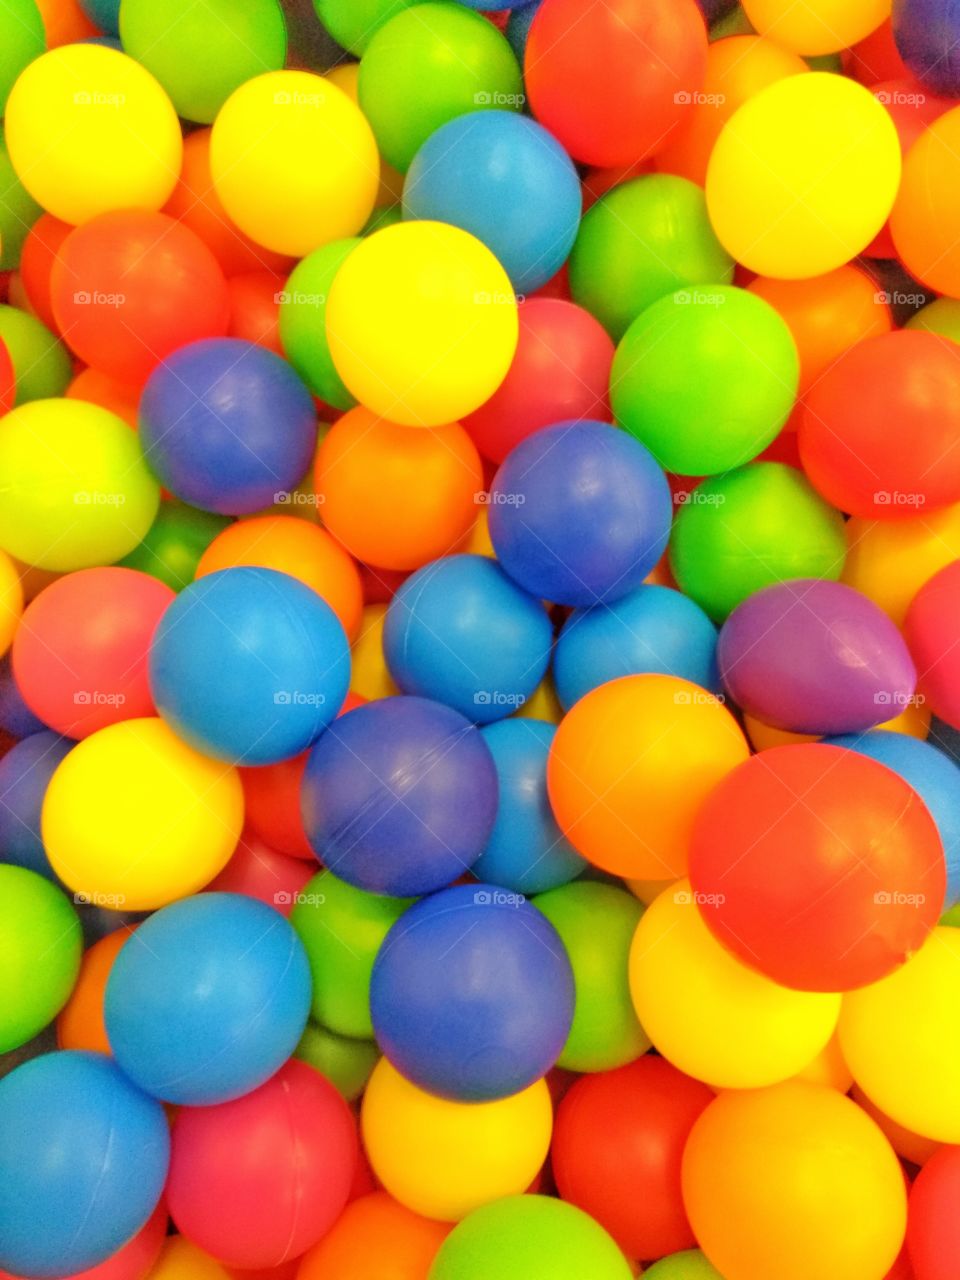 Many bright colored balls